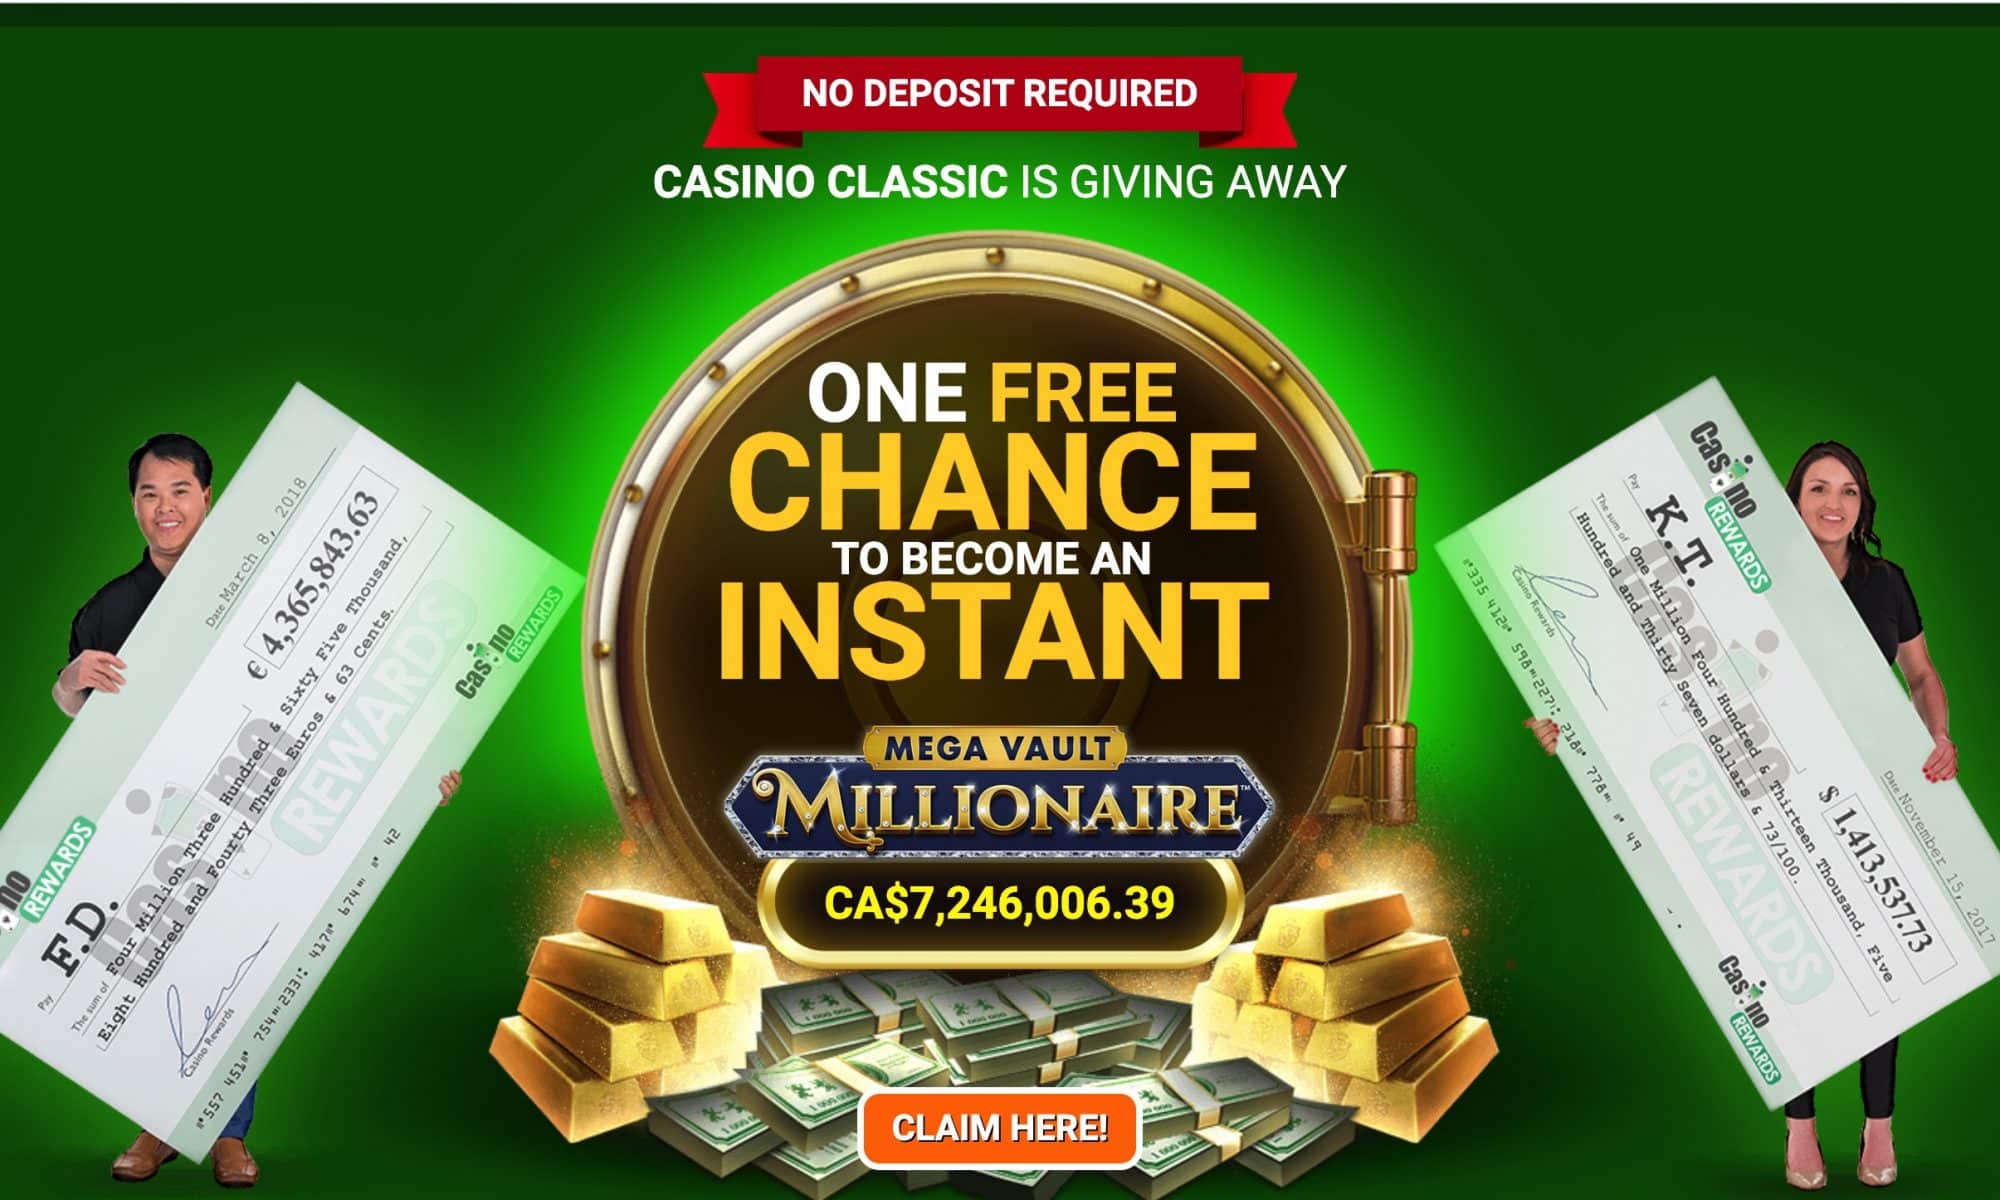 Casino Classic - $500 match prize plus loyalty points